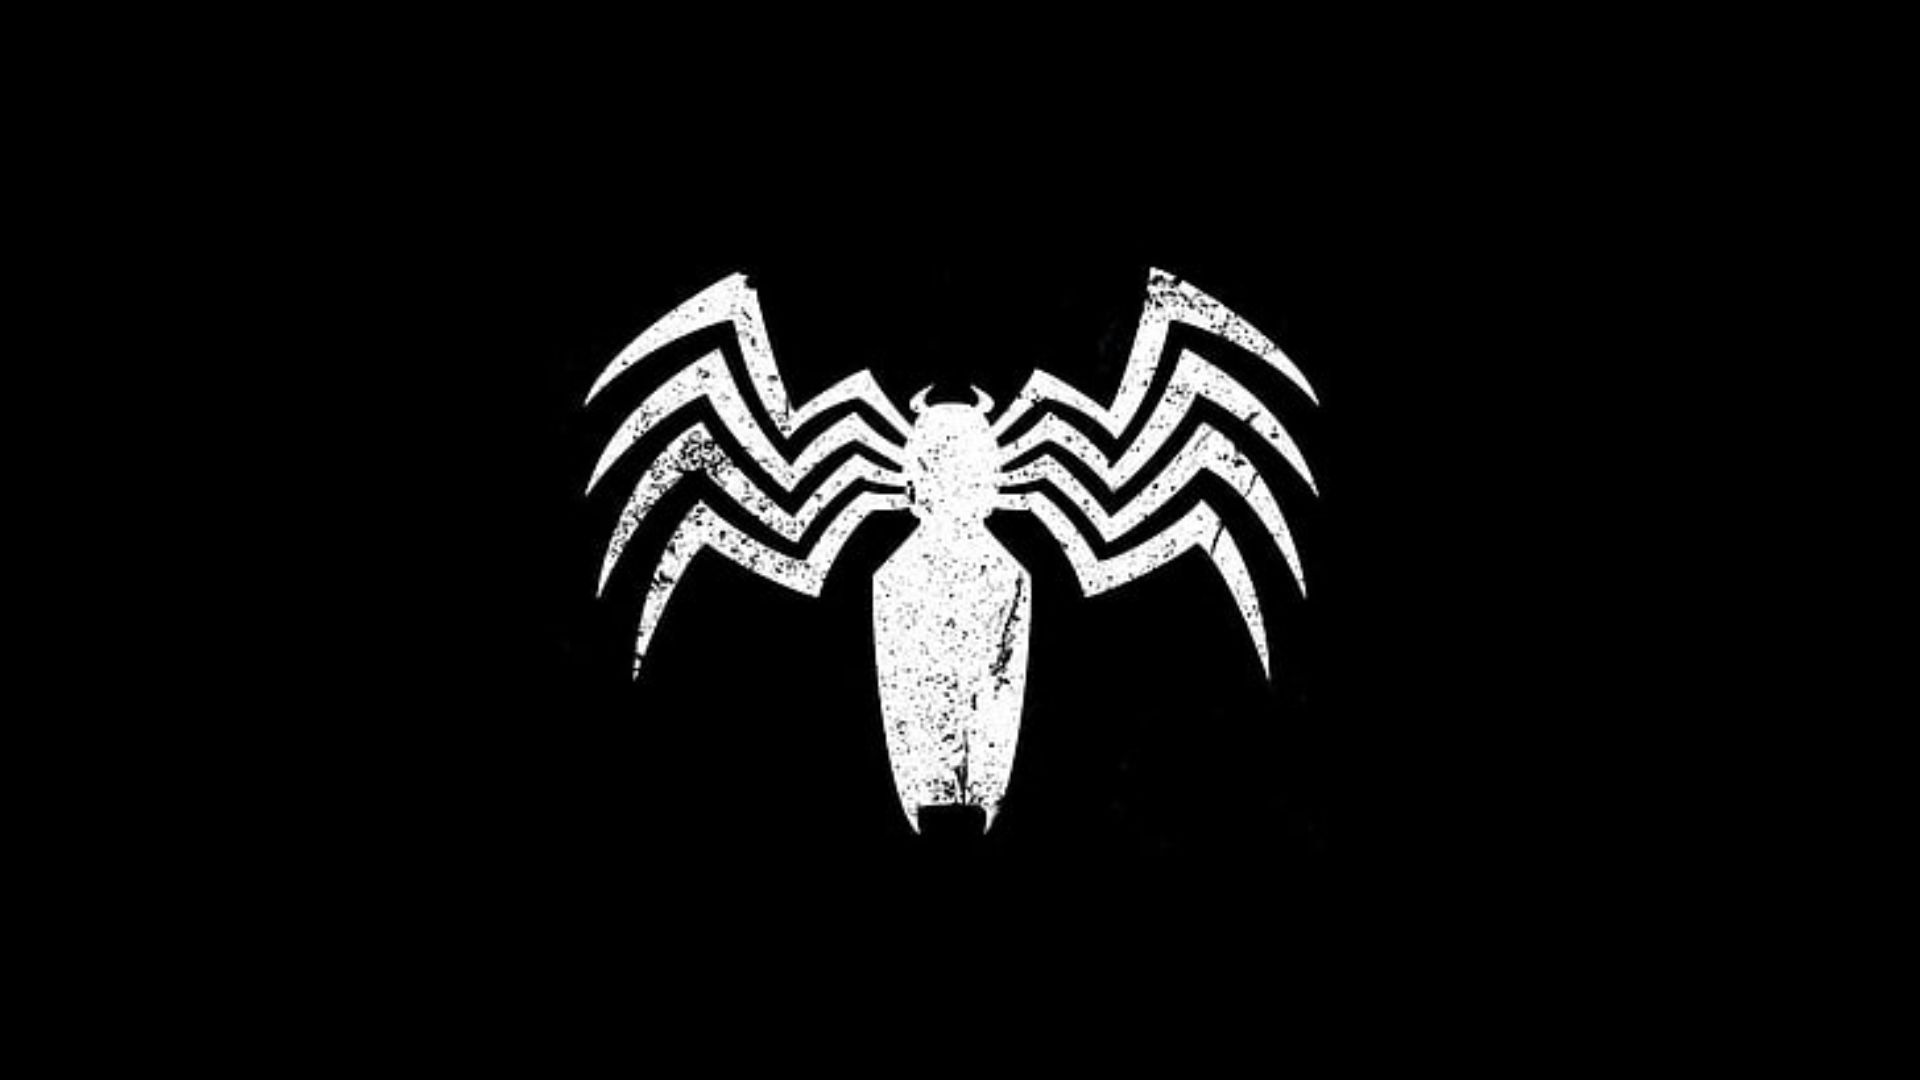 Spiderman Black Logo Wallpapers